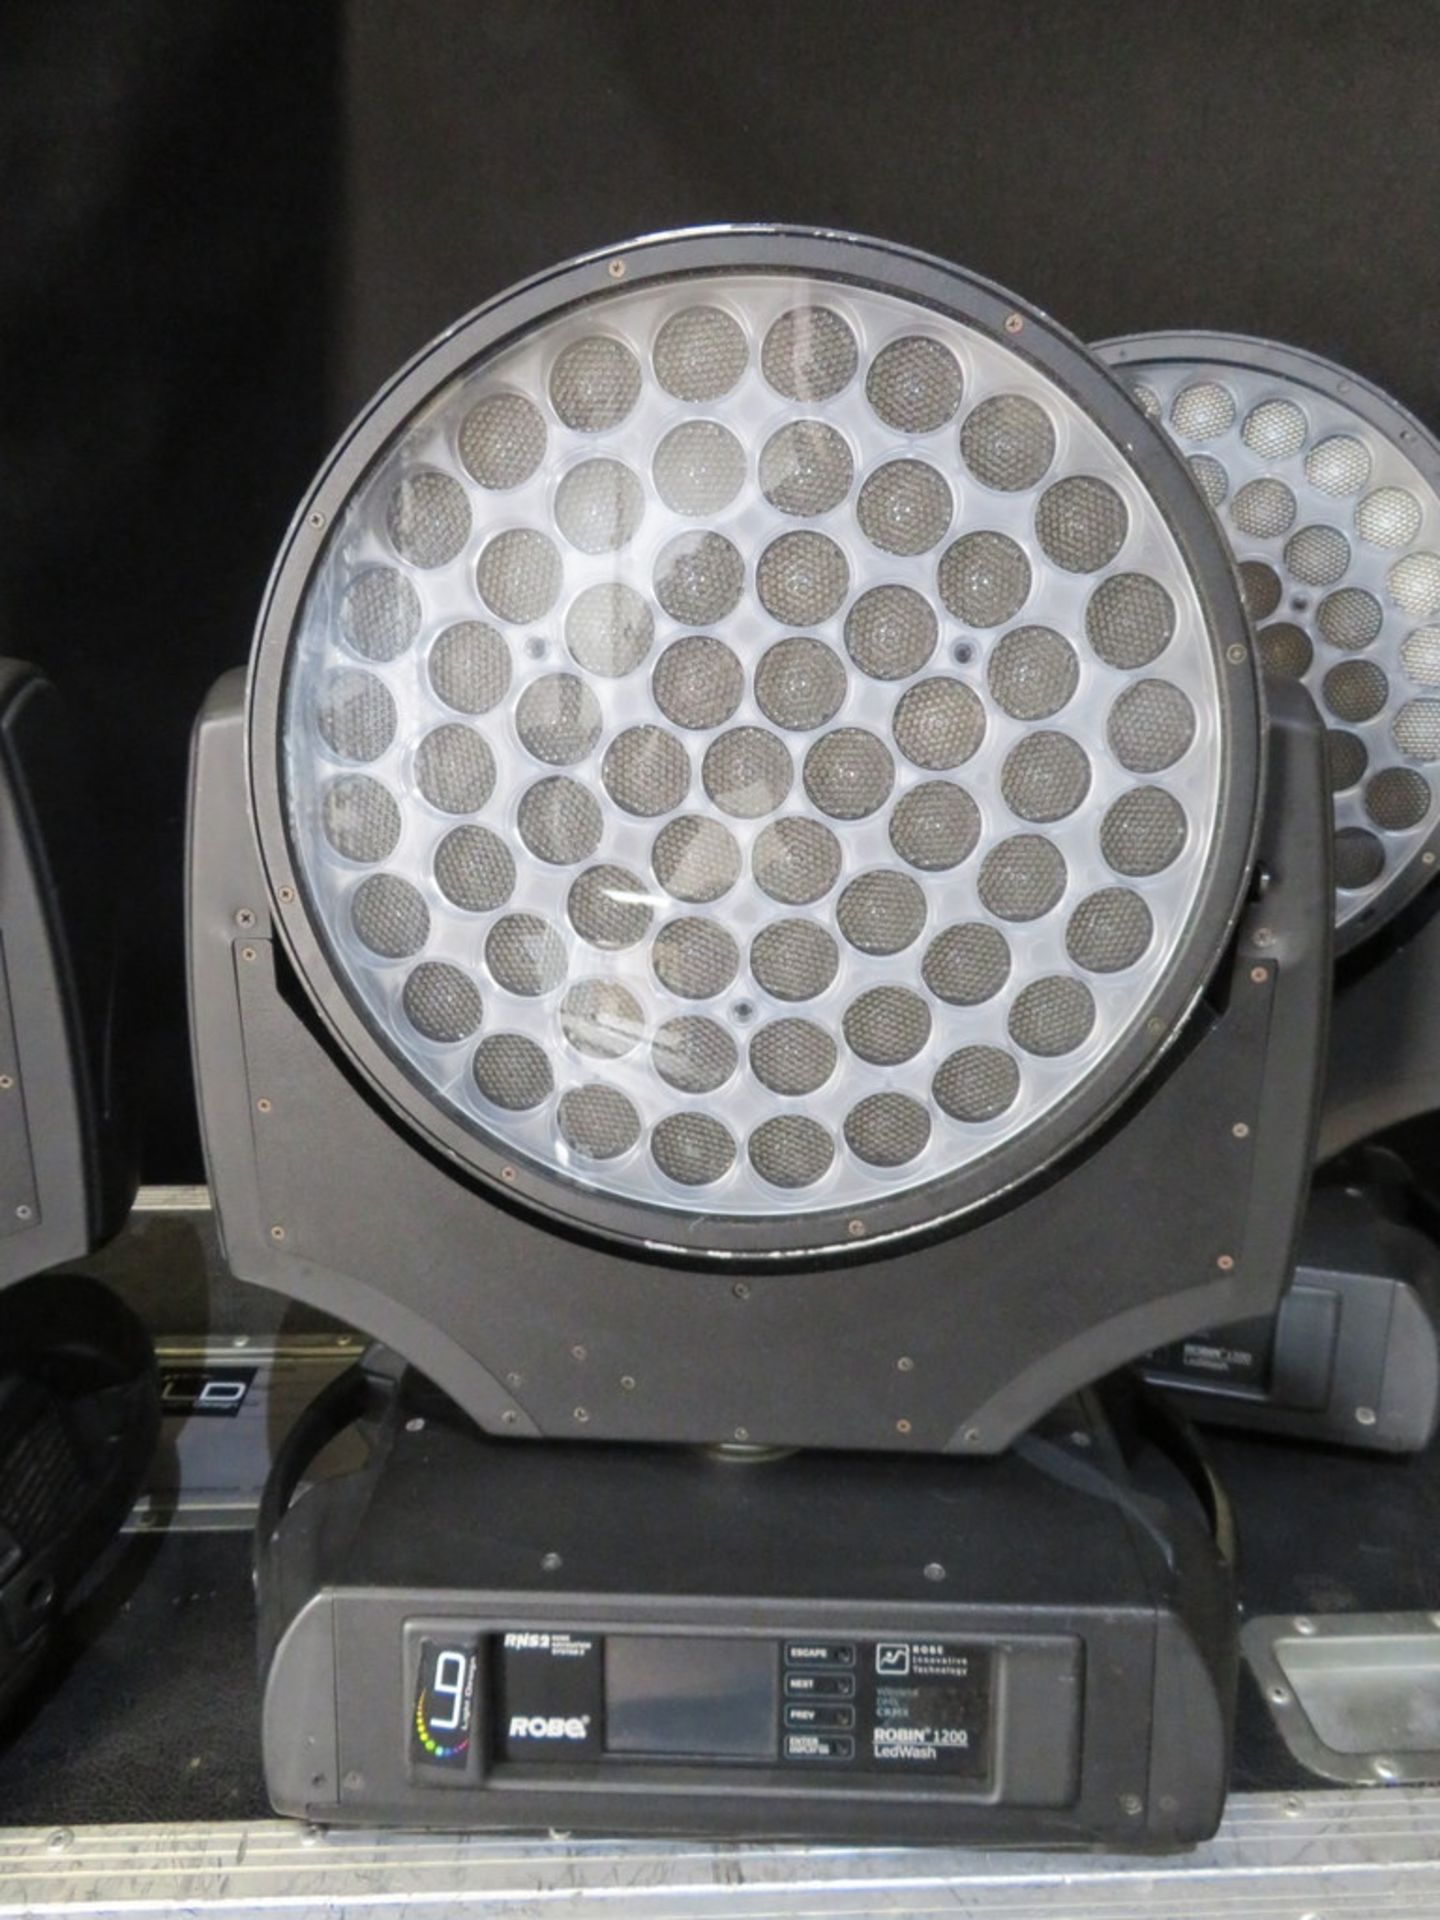 4x Robe Robin 1200 LED wash in 4 way flightcase - Image 4 of 10